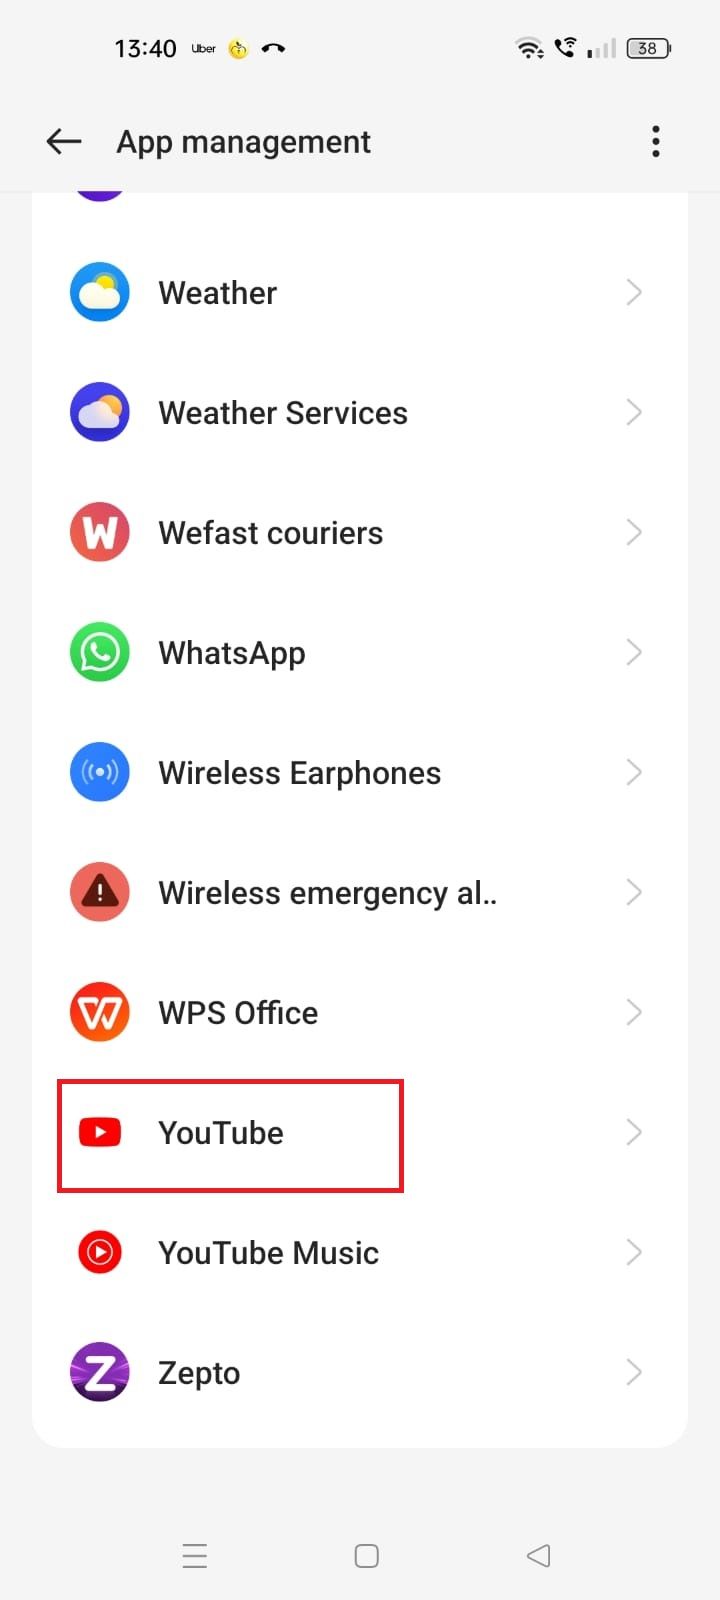 Captura de tela destacando o aplicativo do YouTube no gerenciamento de aplicativos